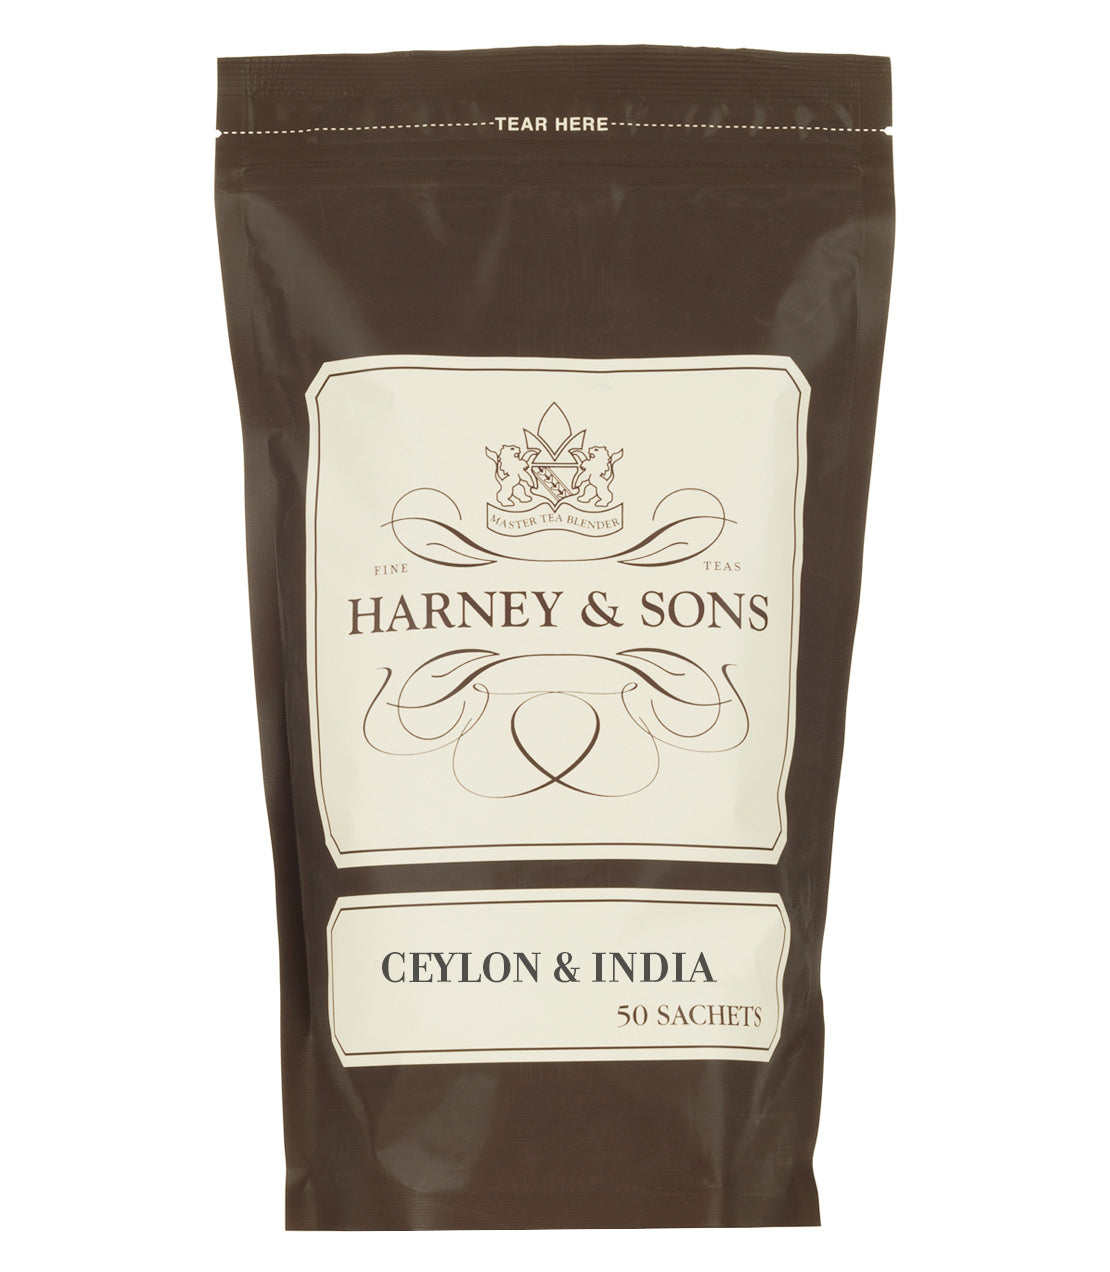 Orange Pekoe (Ceylon & India) - Sachets Bag of 50 Sachets - Harney & Sons Fine Teas